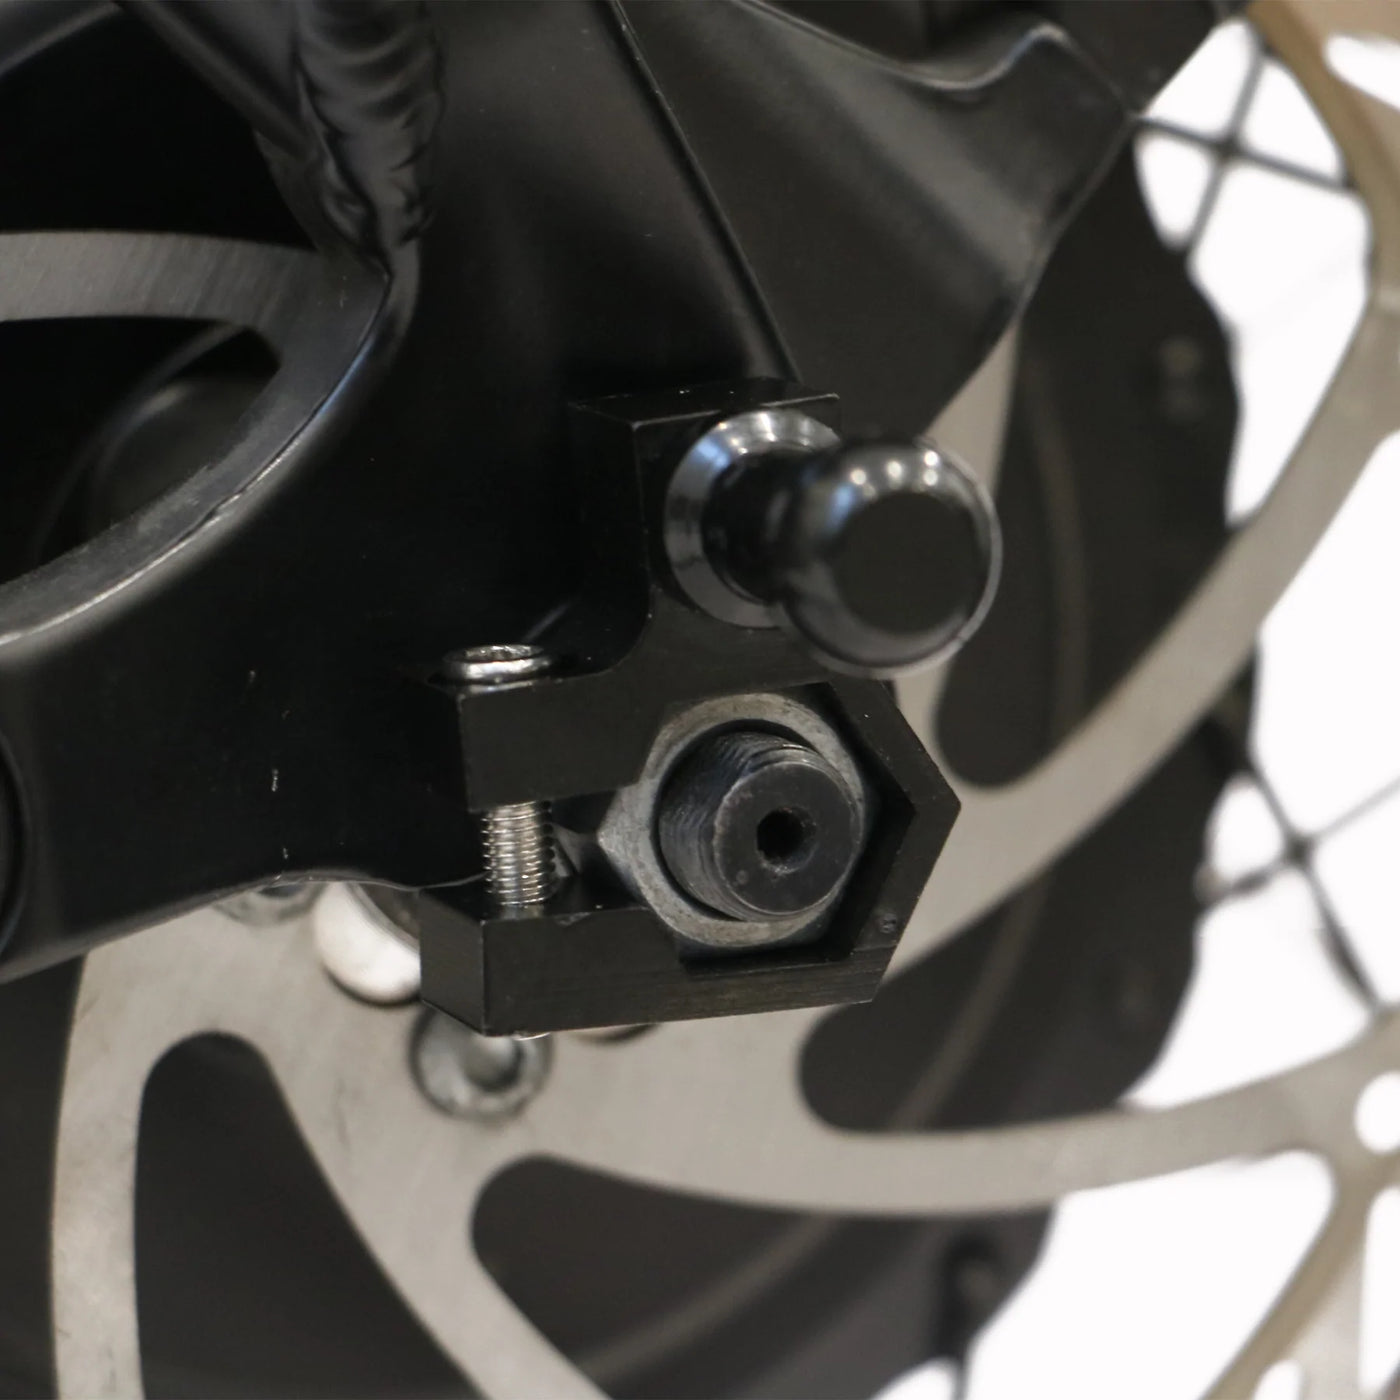 Eunorau M12 Motor Axle Nut Mount Trailer Hitch Adapter Fit for Hub Motor E-Bike - Rider Cycles 